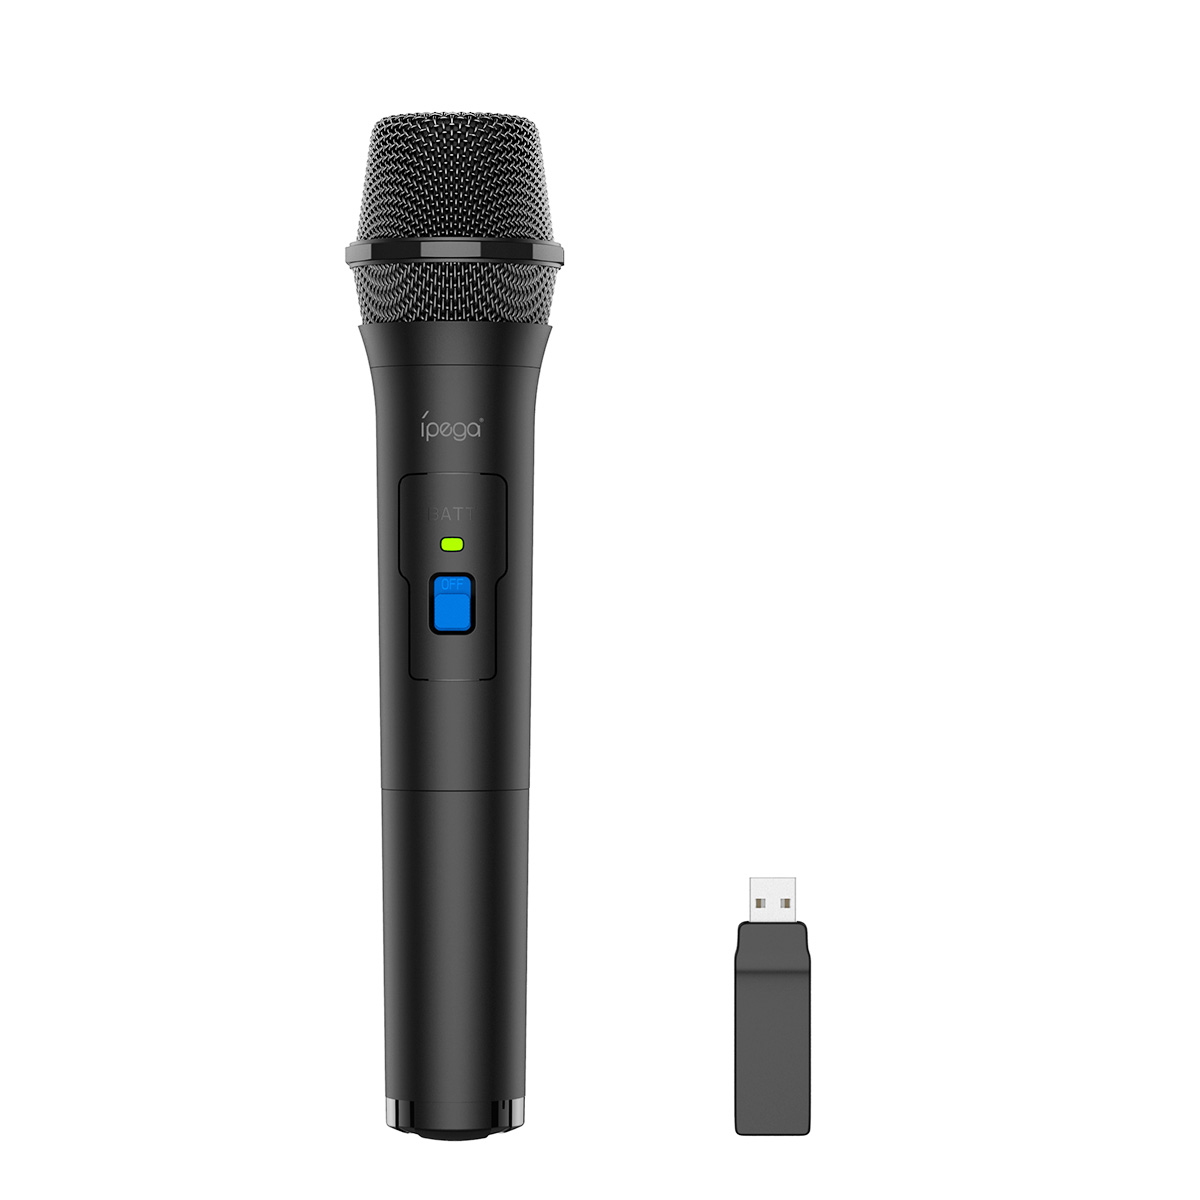 Ipega-9207 wireless microphone